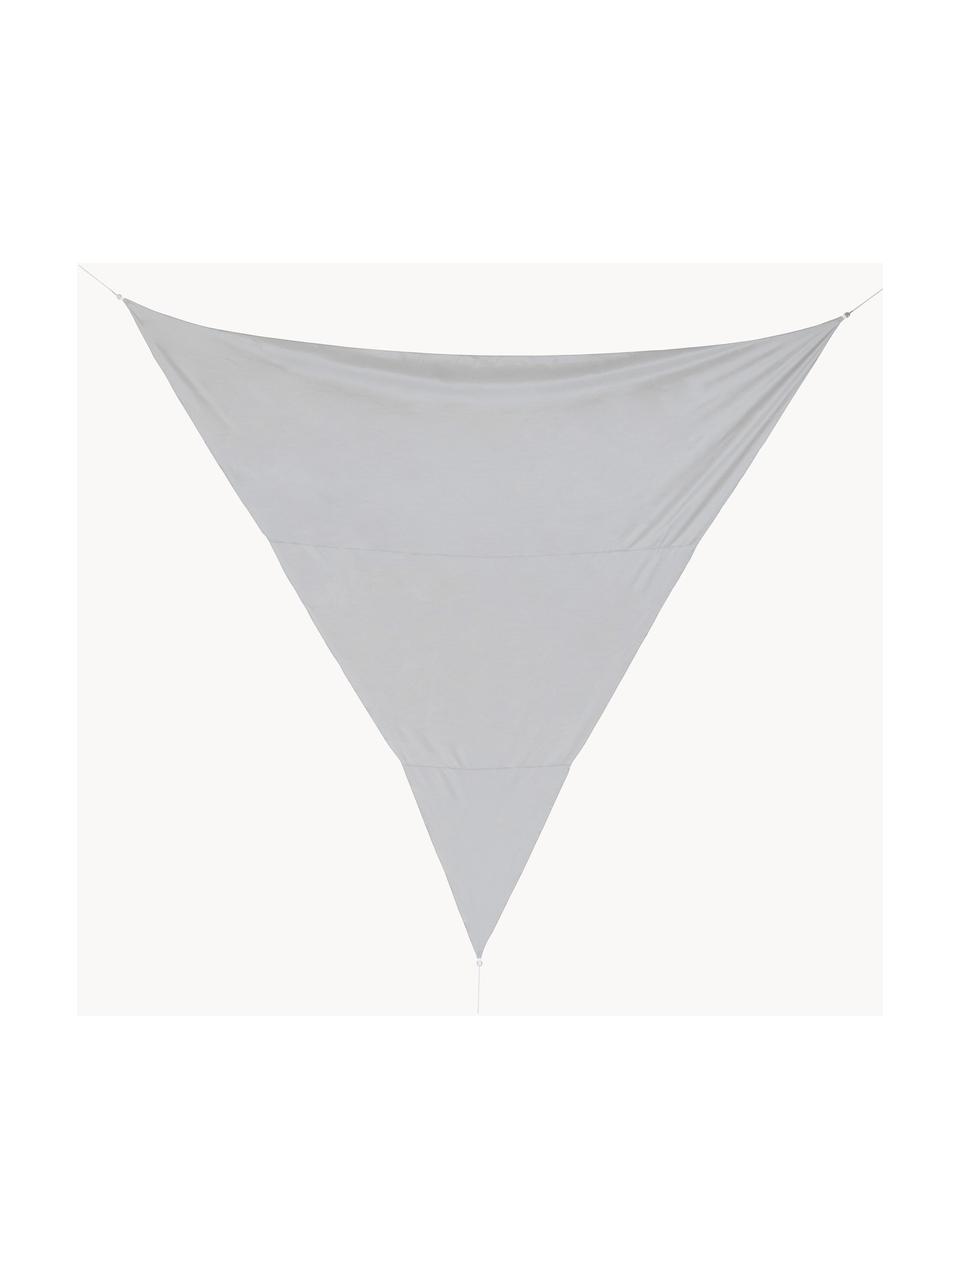 Sonnensegel Triangle, Grau, B 360 x L 360 cm